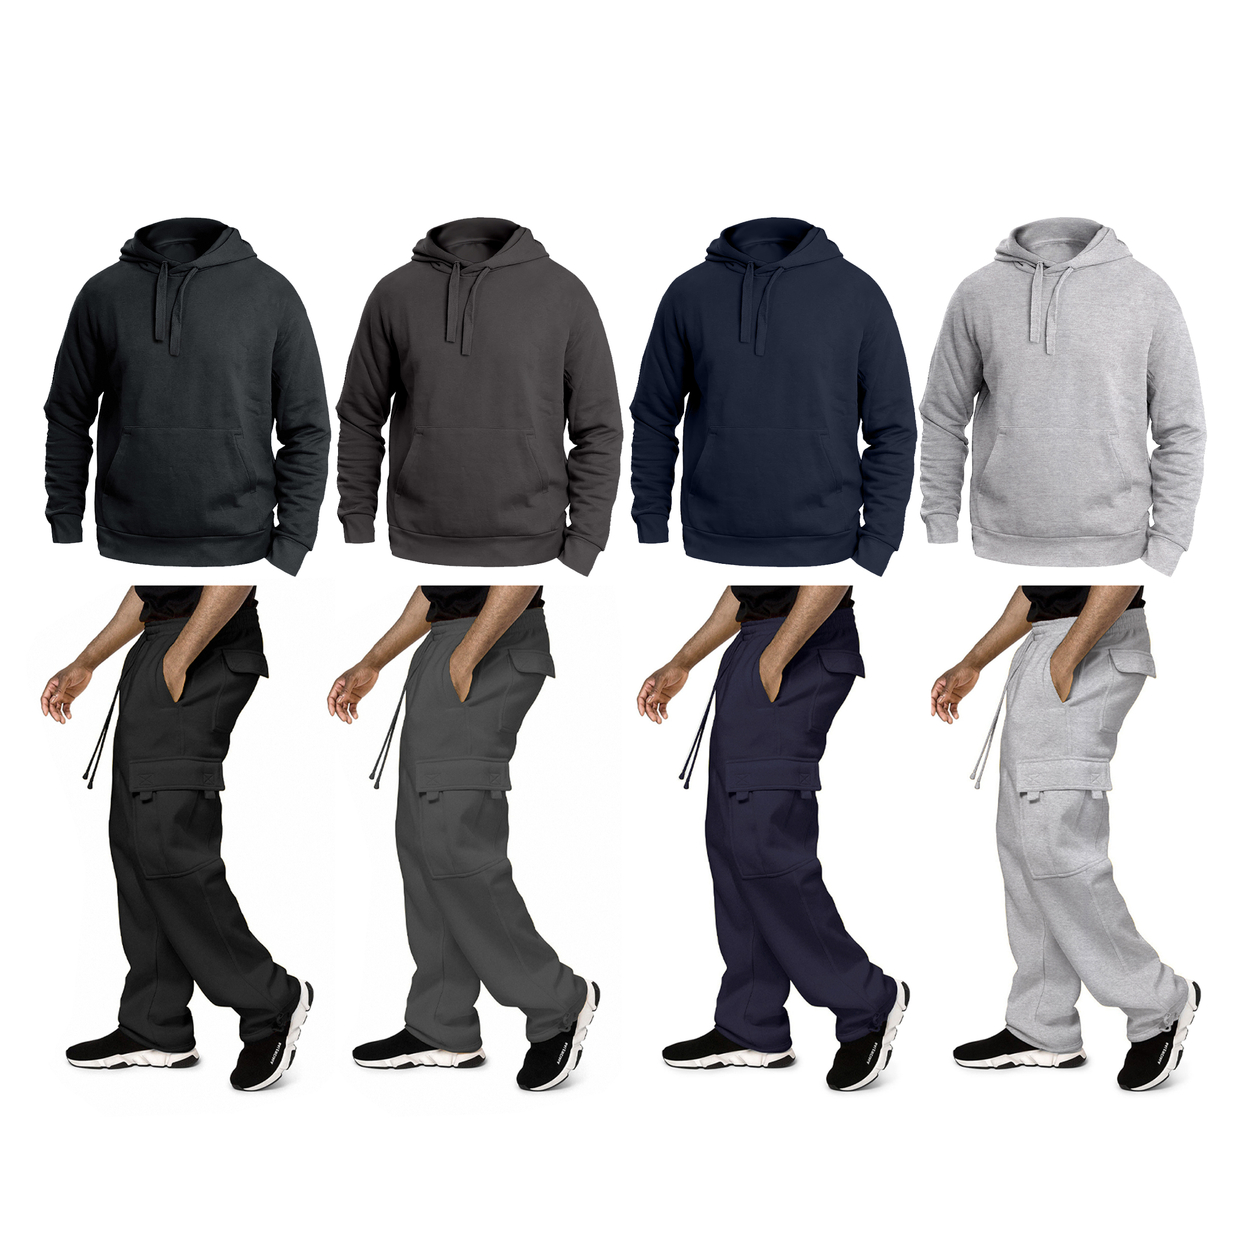 Men's Big & Tall Winter Warm Cozy Athletic Fleece Lined Multi-Pocket Cargo Sweatsuit - Black, Large